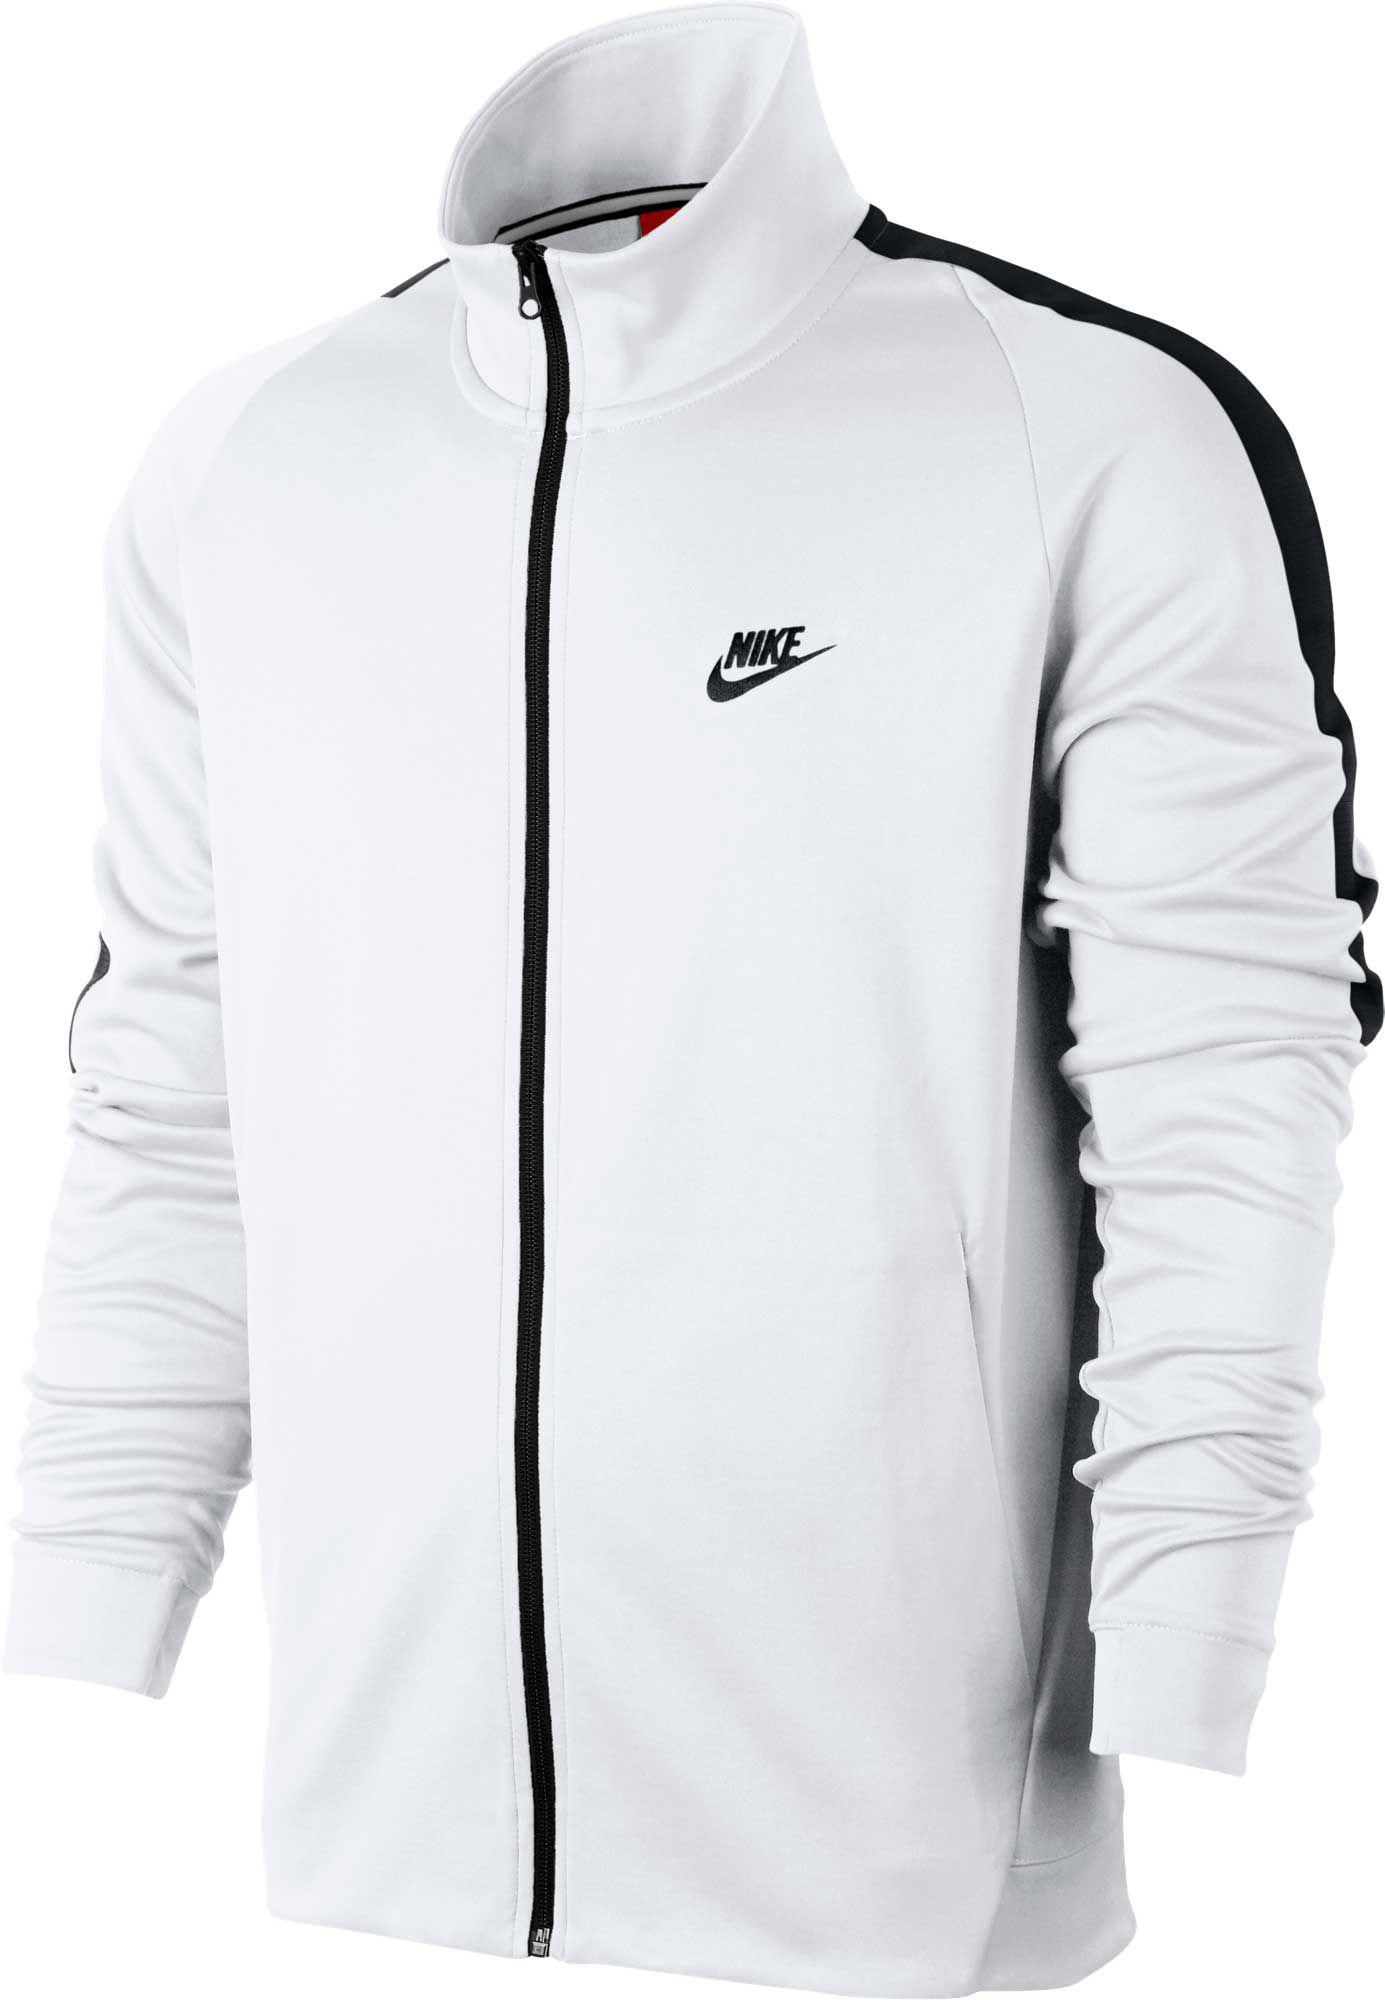 Nike Sportswear Pk Tribute N98 Jacket in White/Black/Black (White) for ...